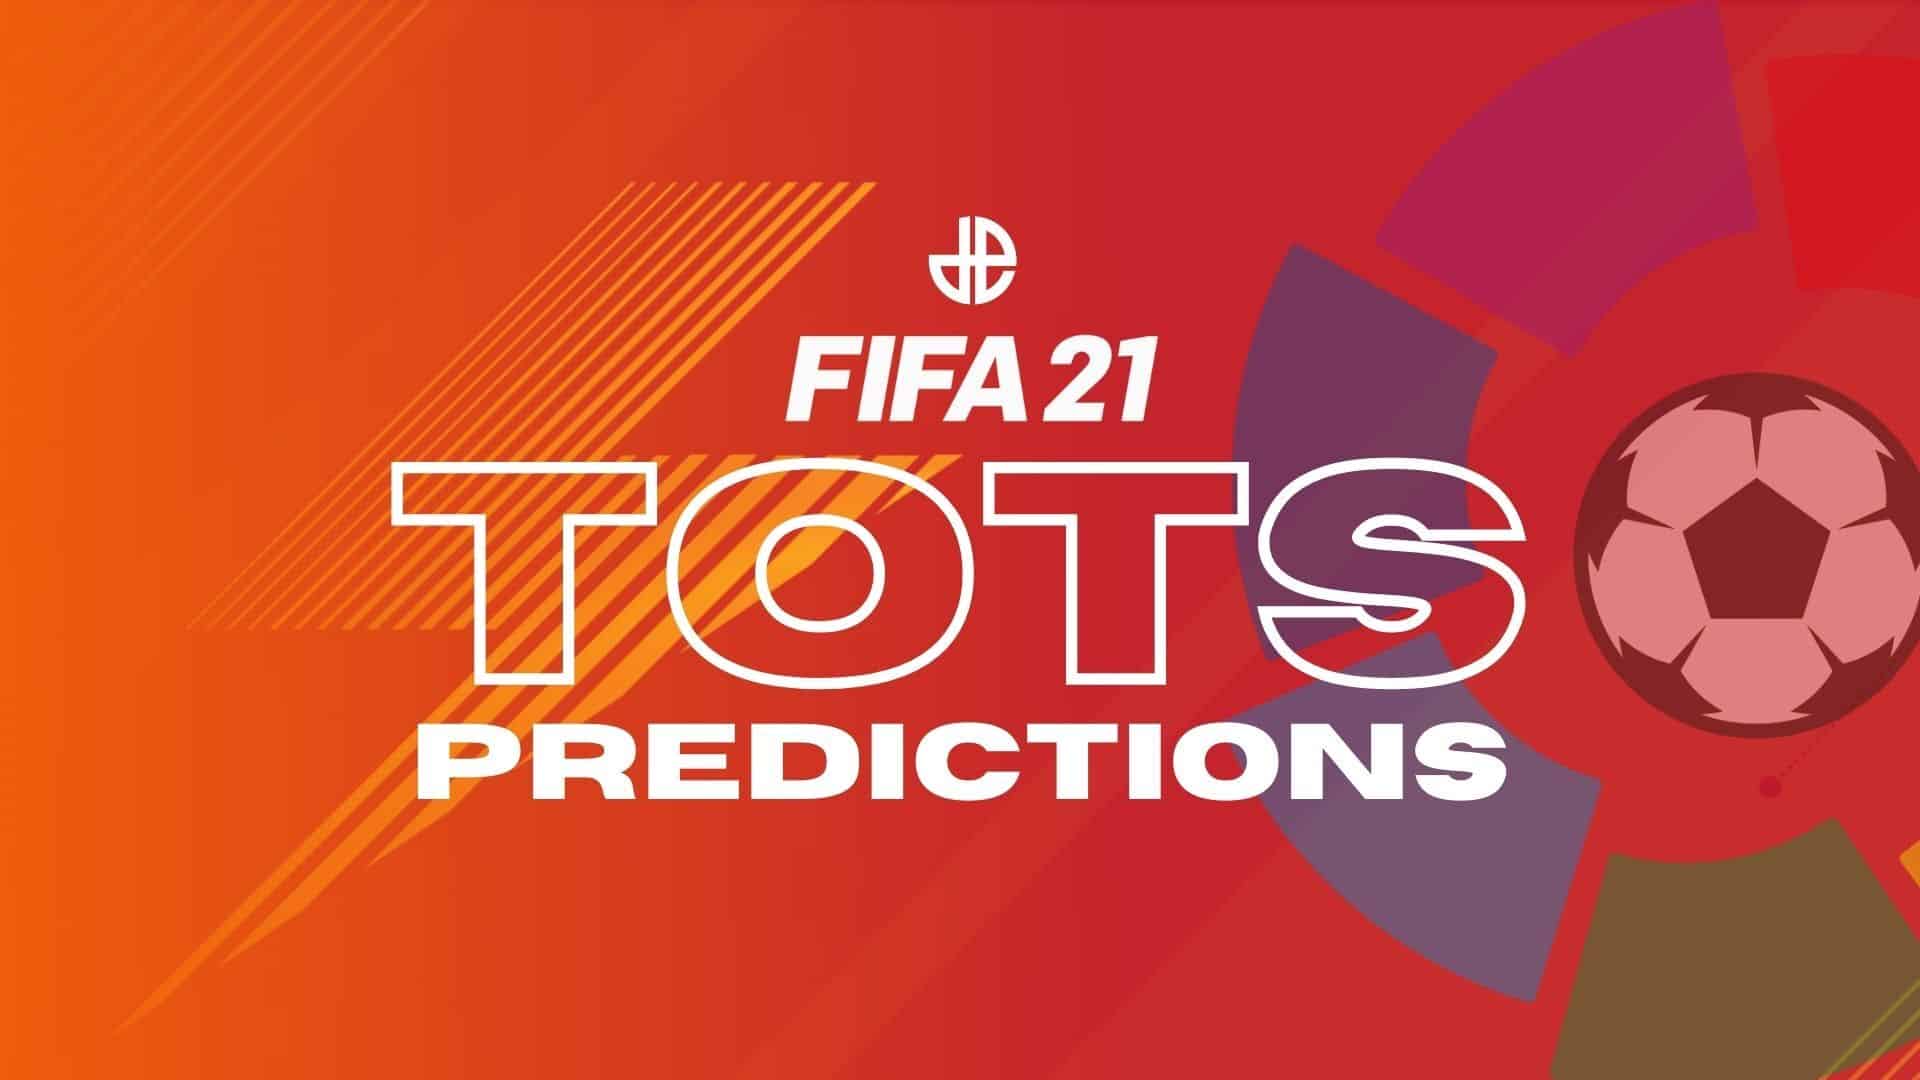 FIFA 21 La Liga Team of the Season predictions